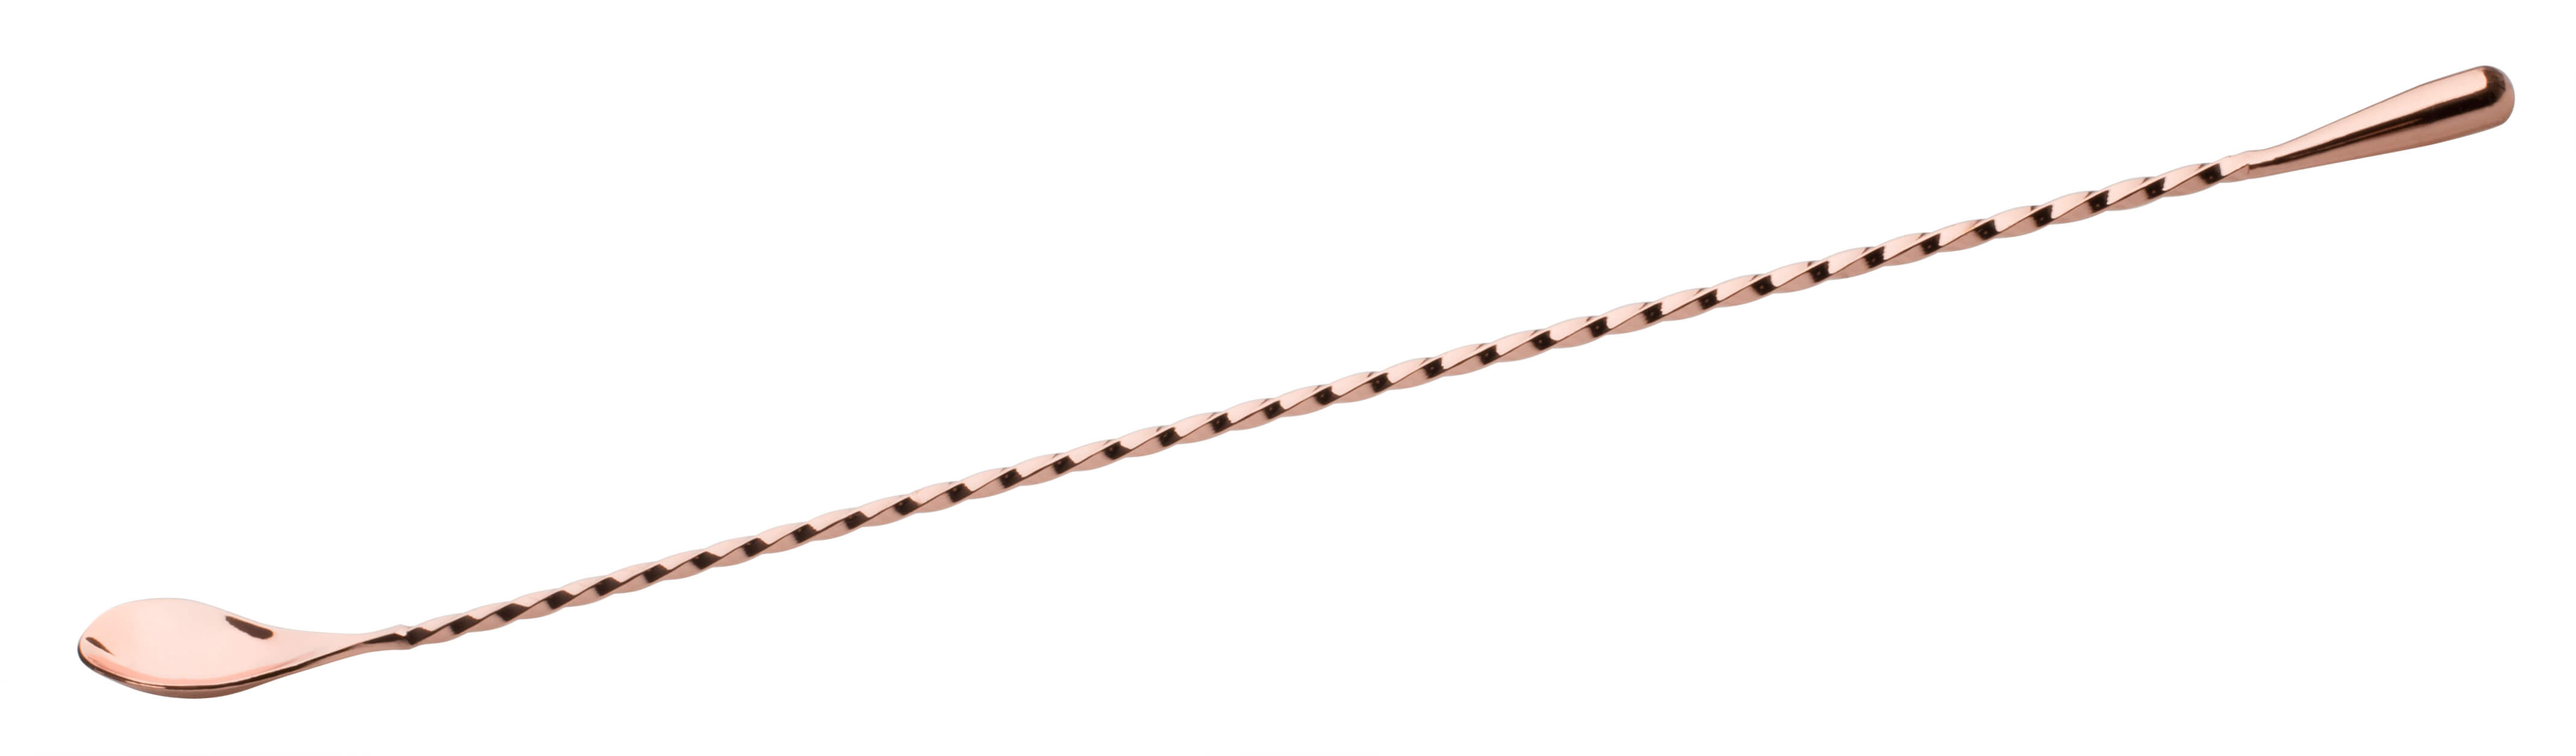 Barspoon Teardrop, copper-colored - 40cm